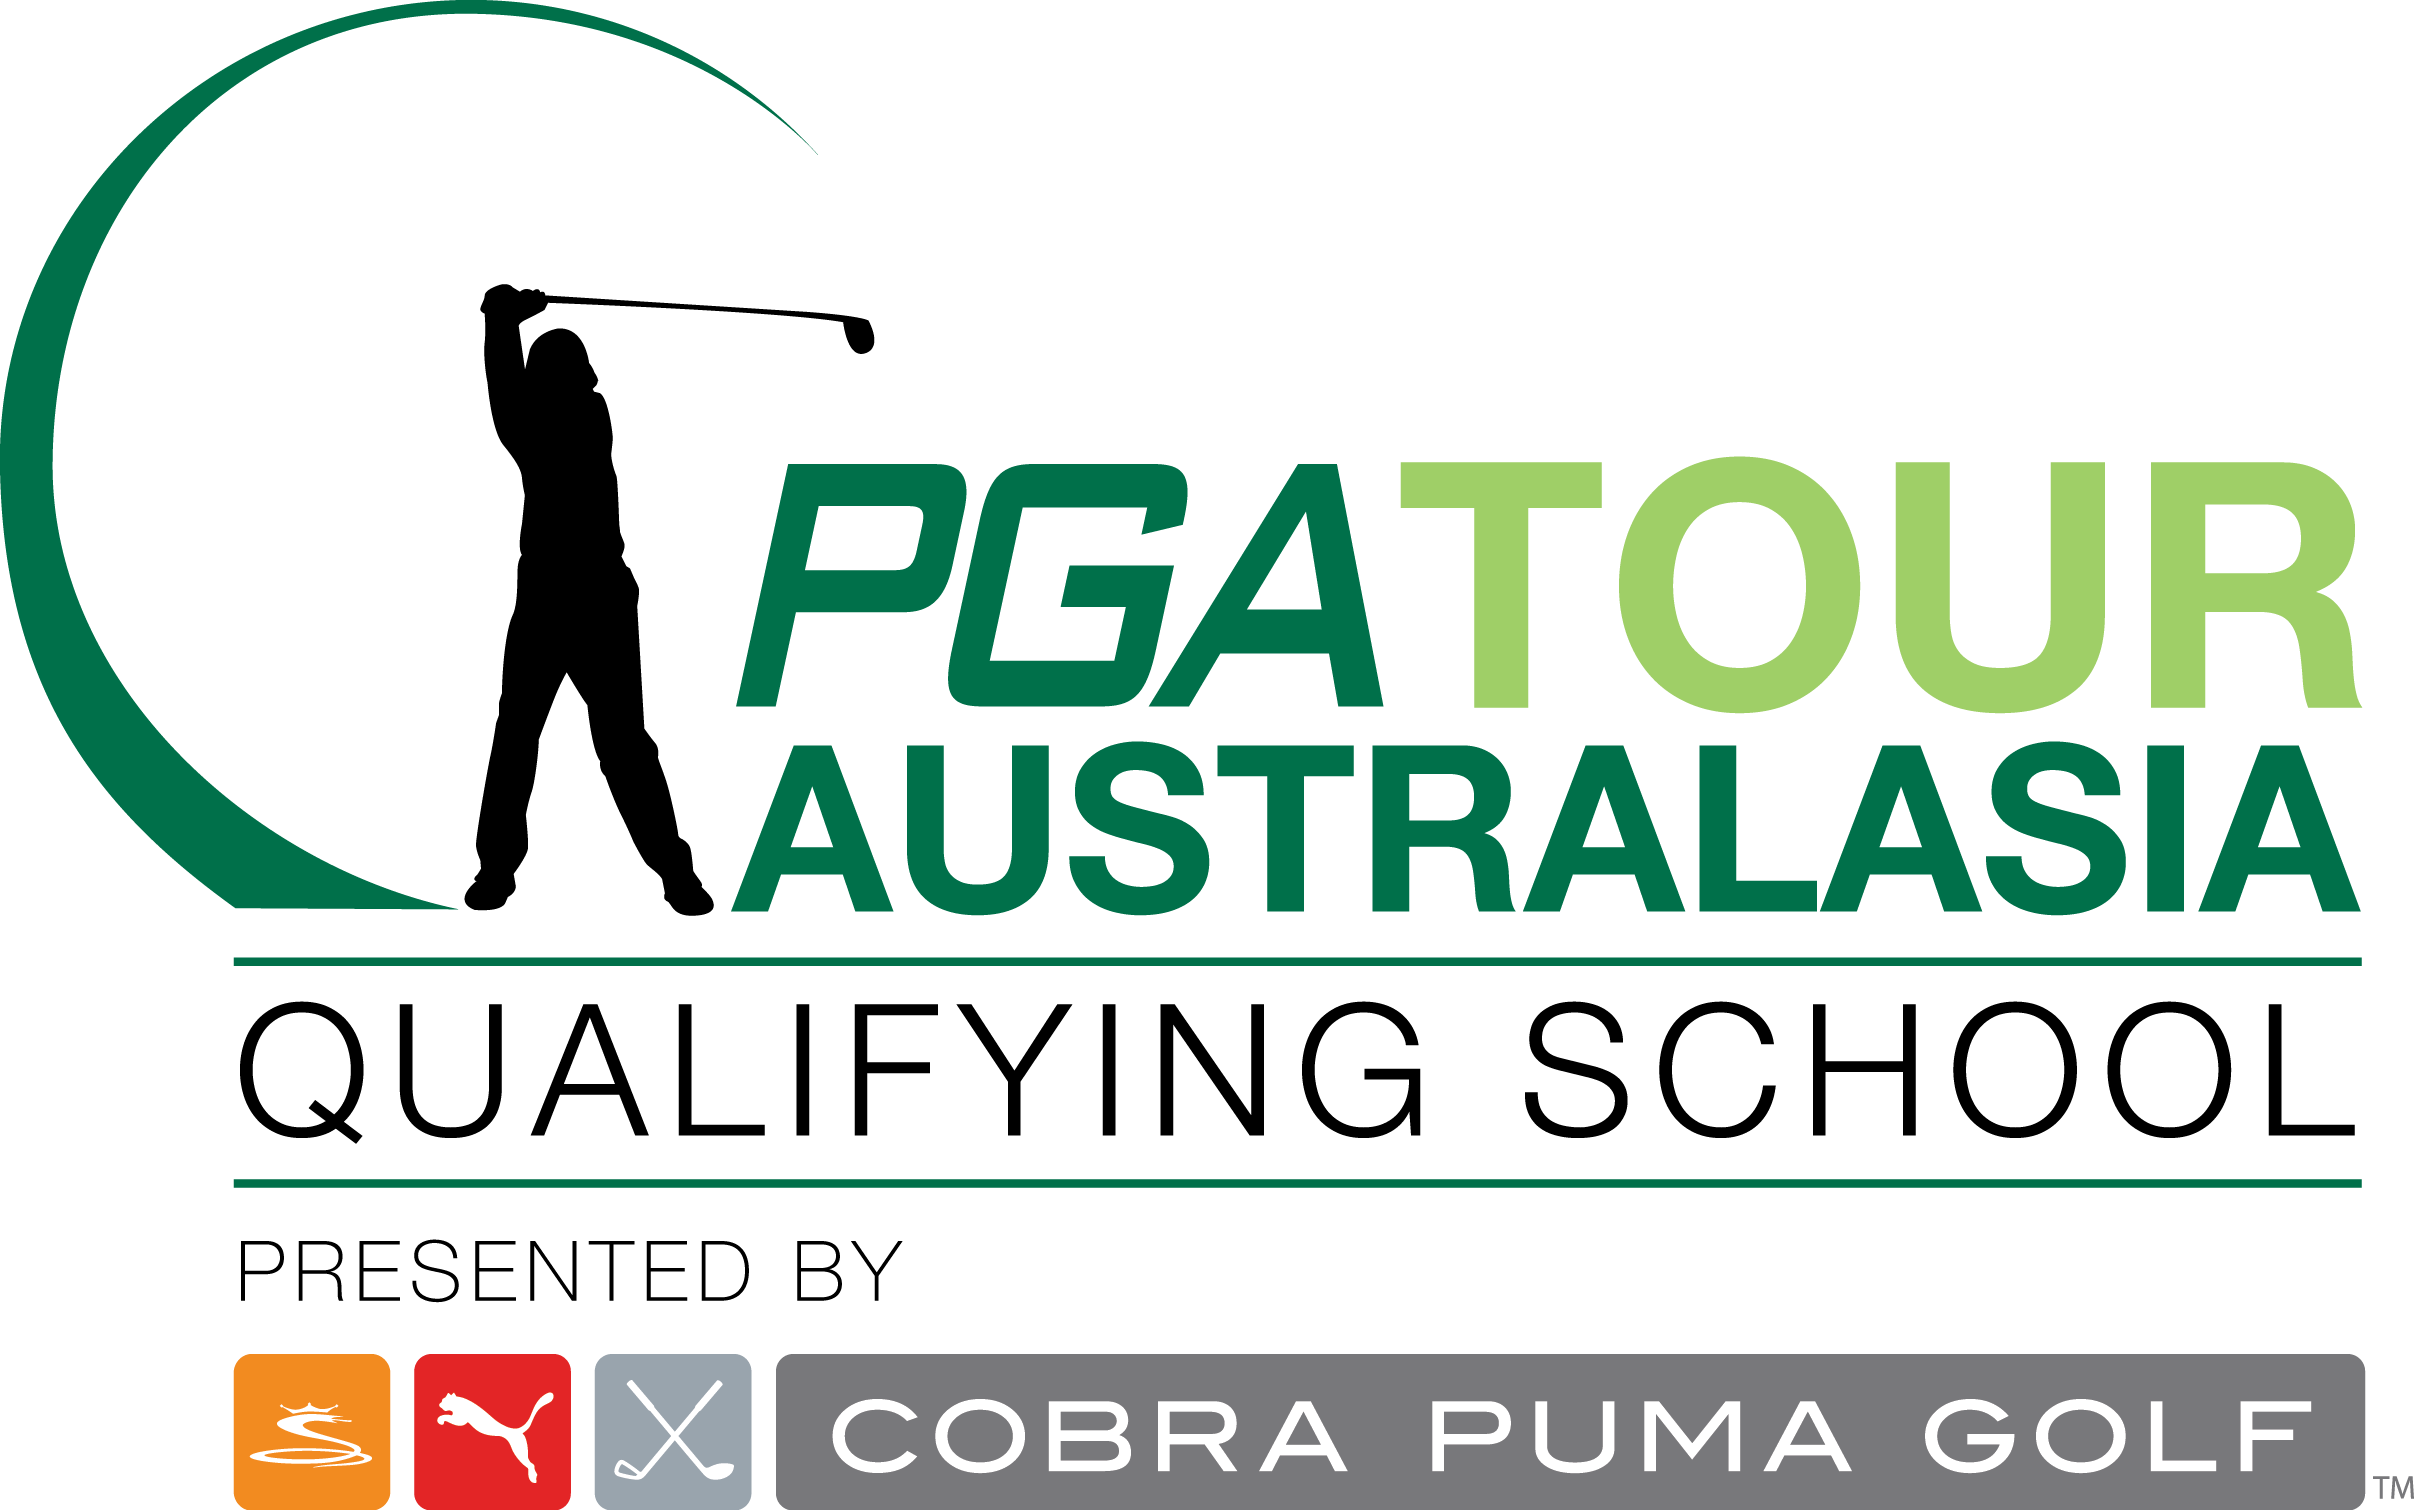 cobra puma golf australia